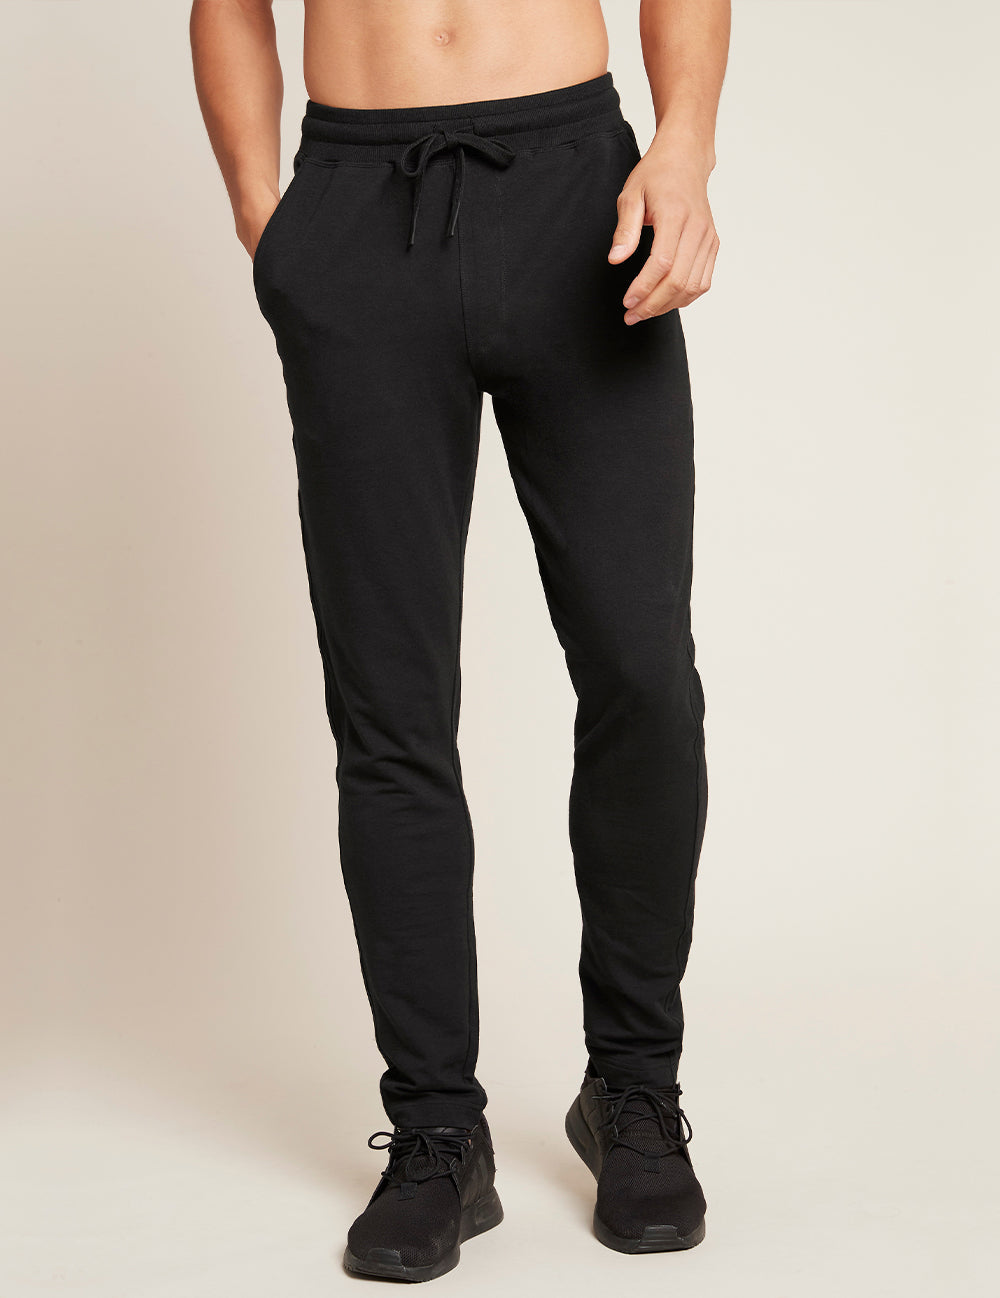 Men_s-Weekend-sweatpants-Black-Front.jpg